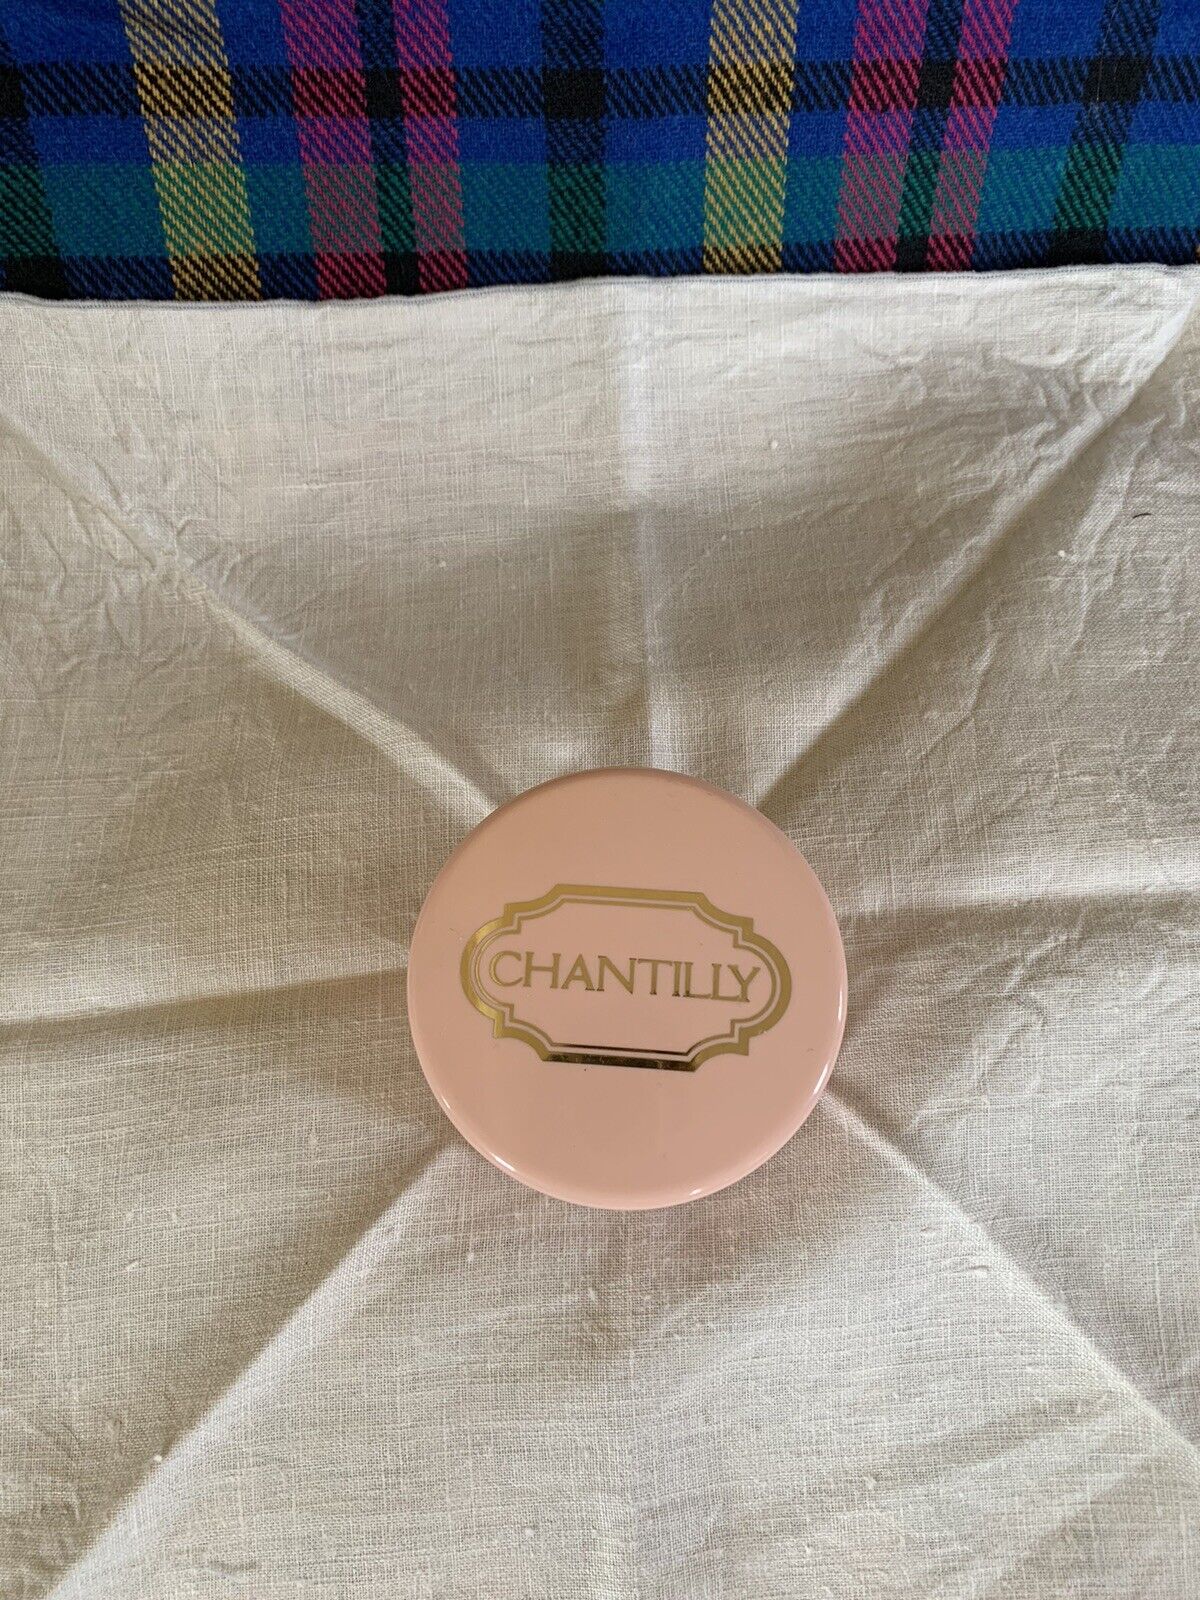 VTG Chantilly by Dana Dusting Body Powder 1.75 oz Sealed Interior with Puff